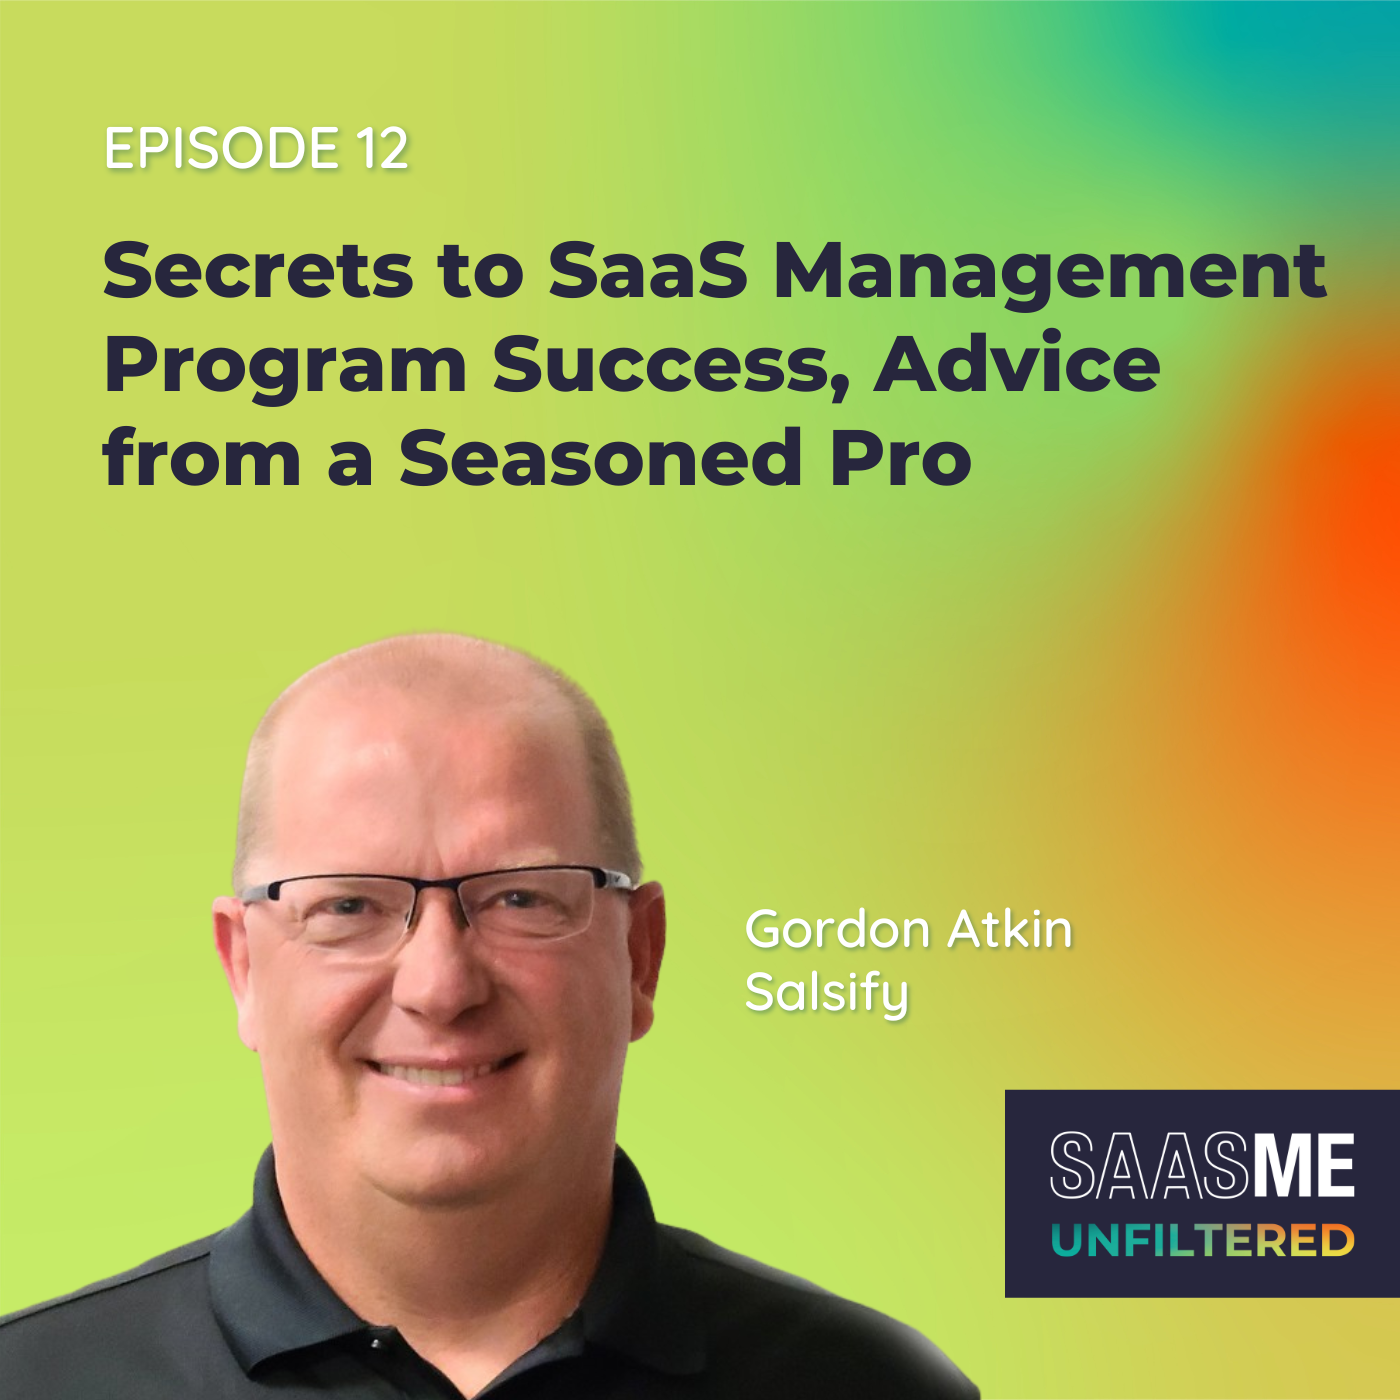 Gordon Atkin: Secrets to SaaS Management Program Success, Advice from a Seasoned Pro